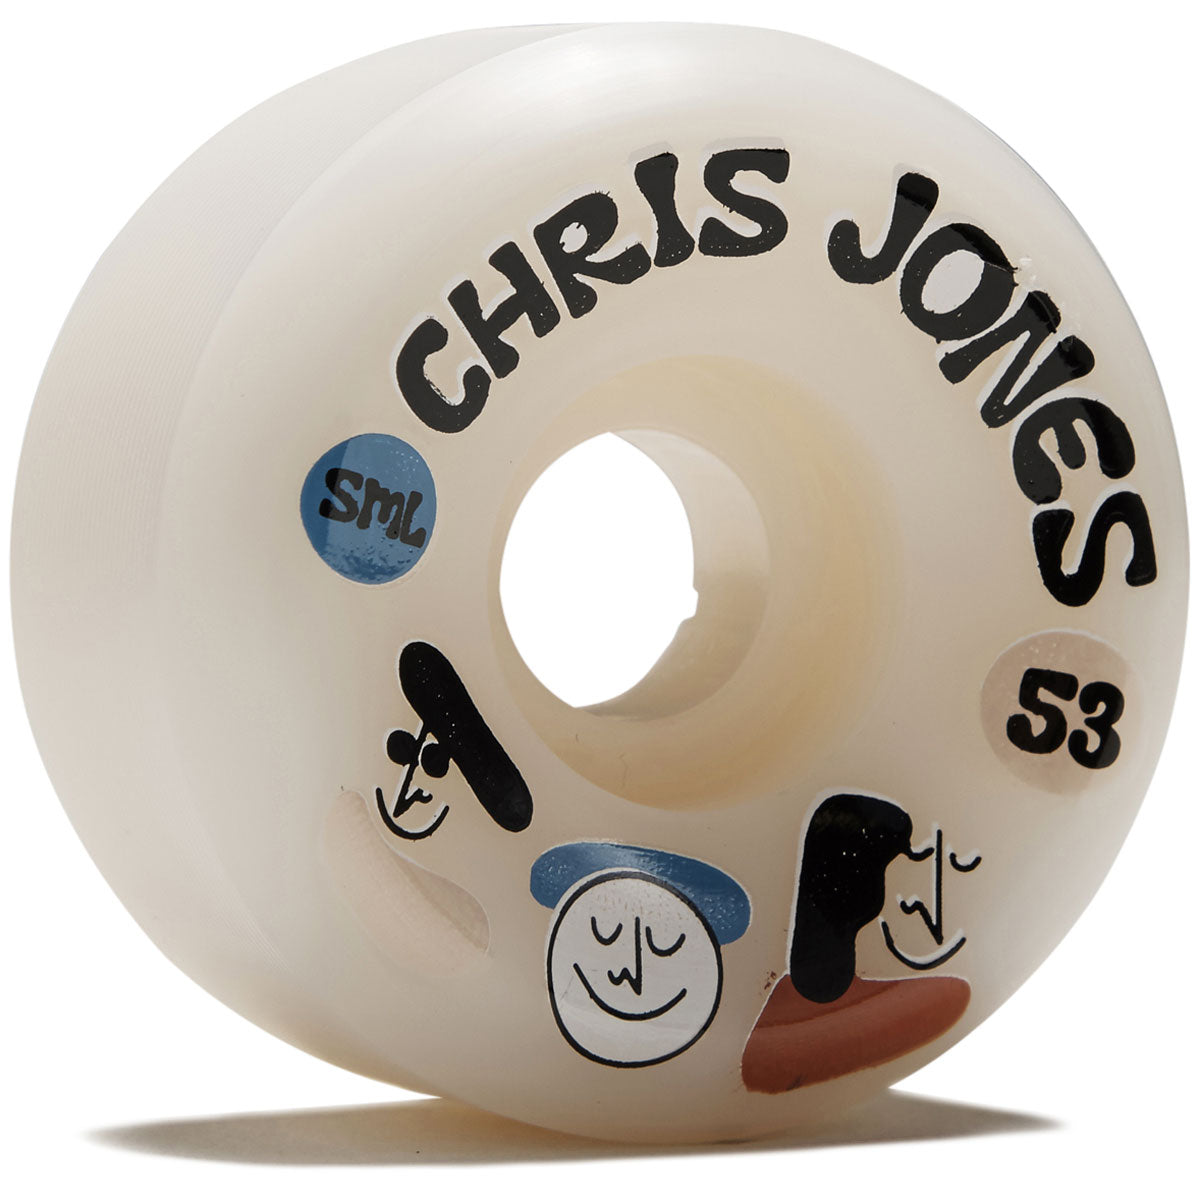 SML Bluff Park Chris Jones Skateboard Wheels - 53mm image 1